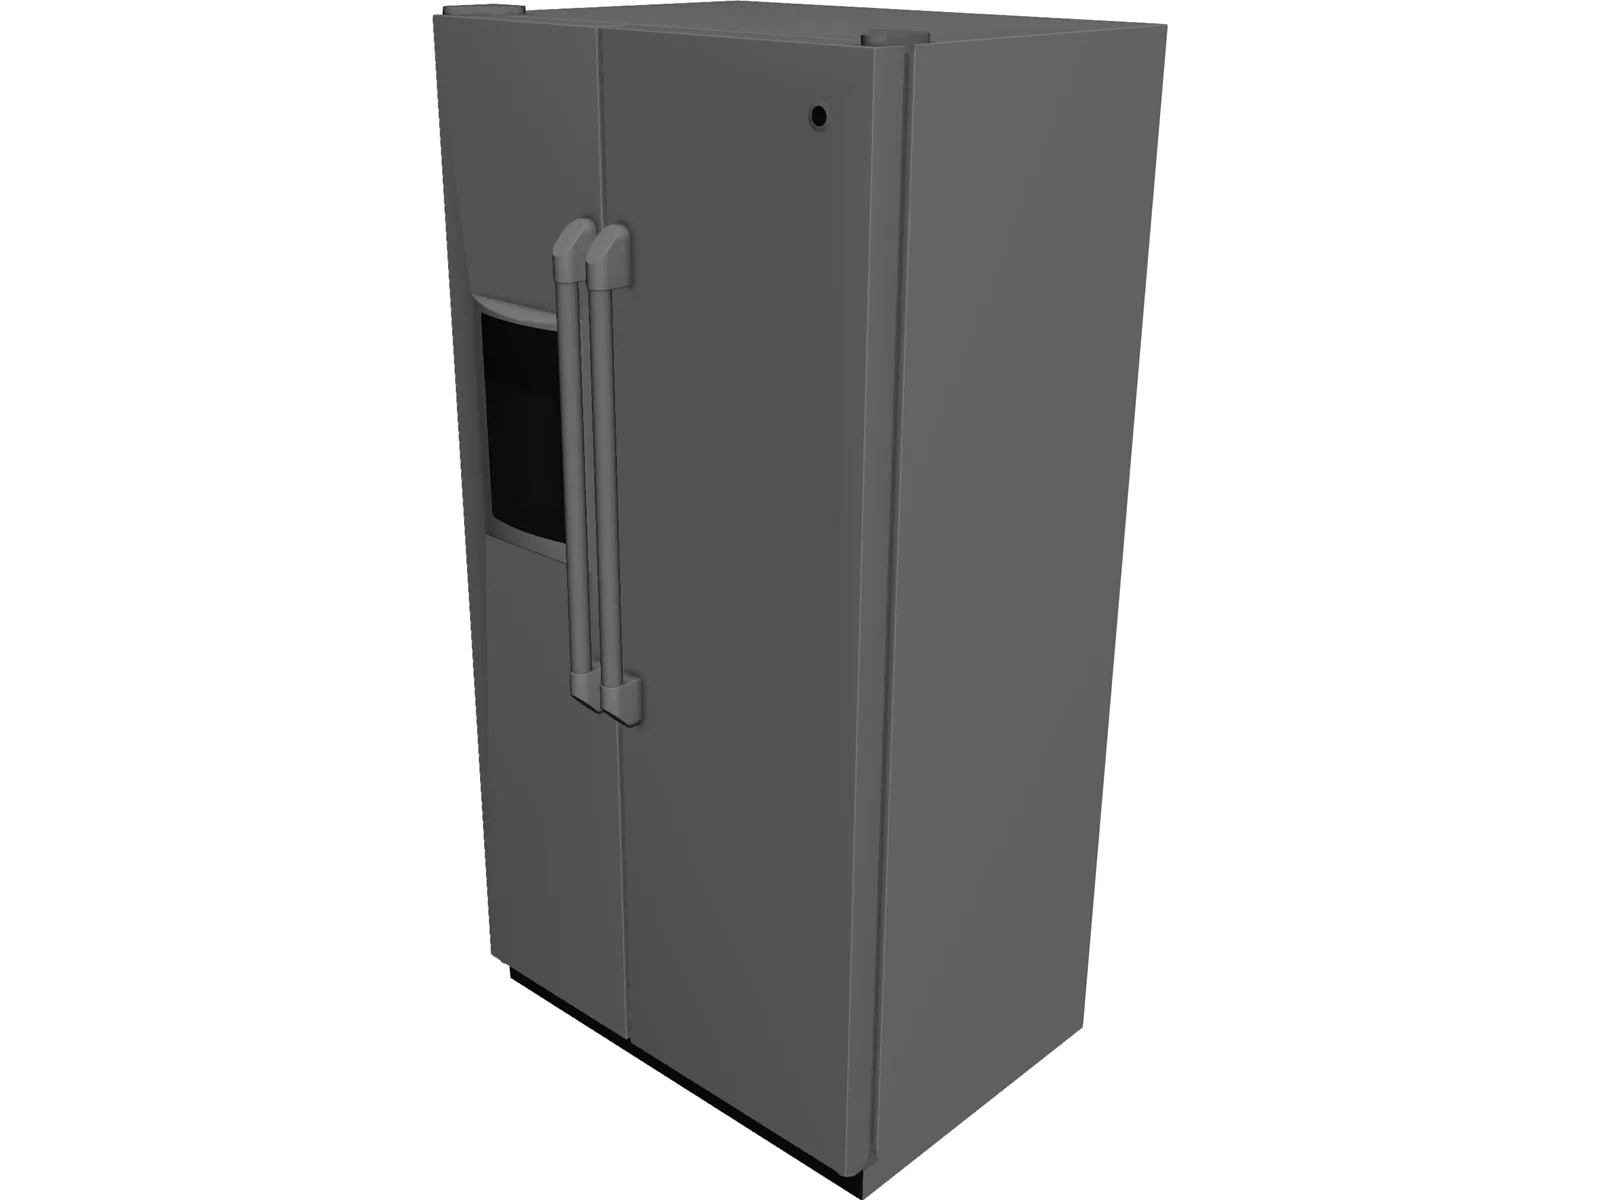 GE Refrigerator 3D Model